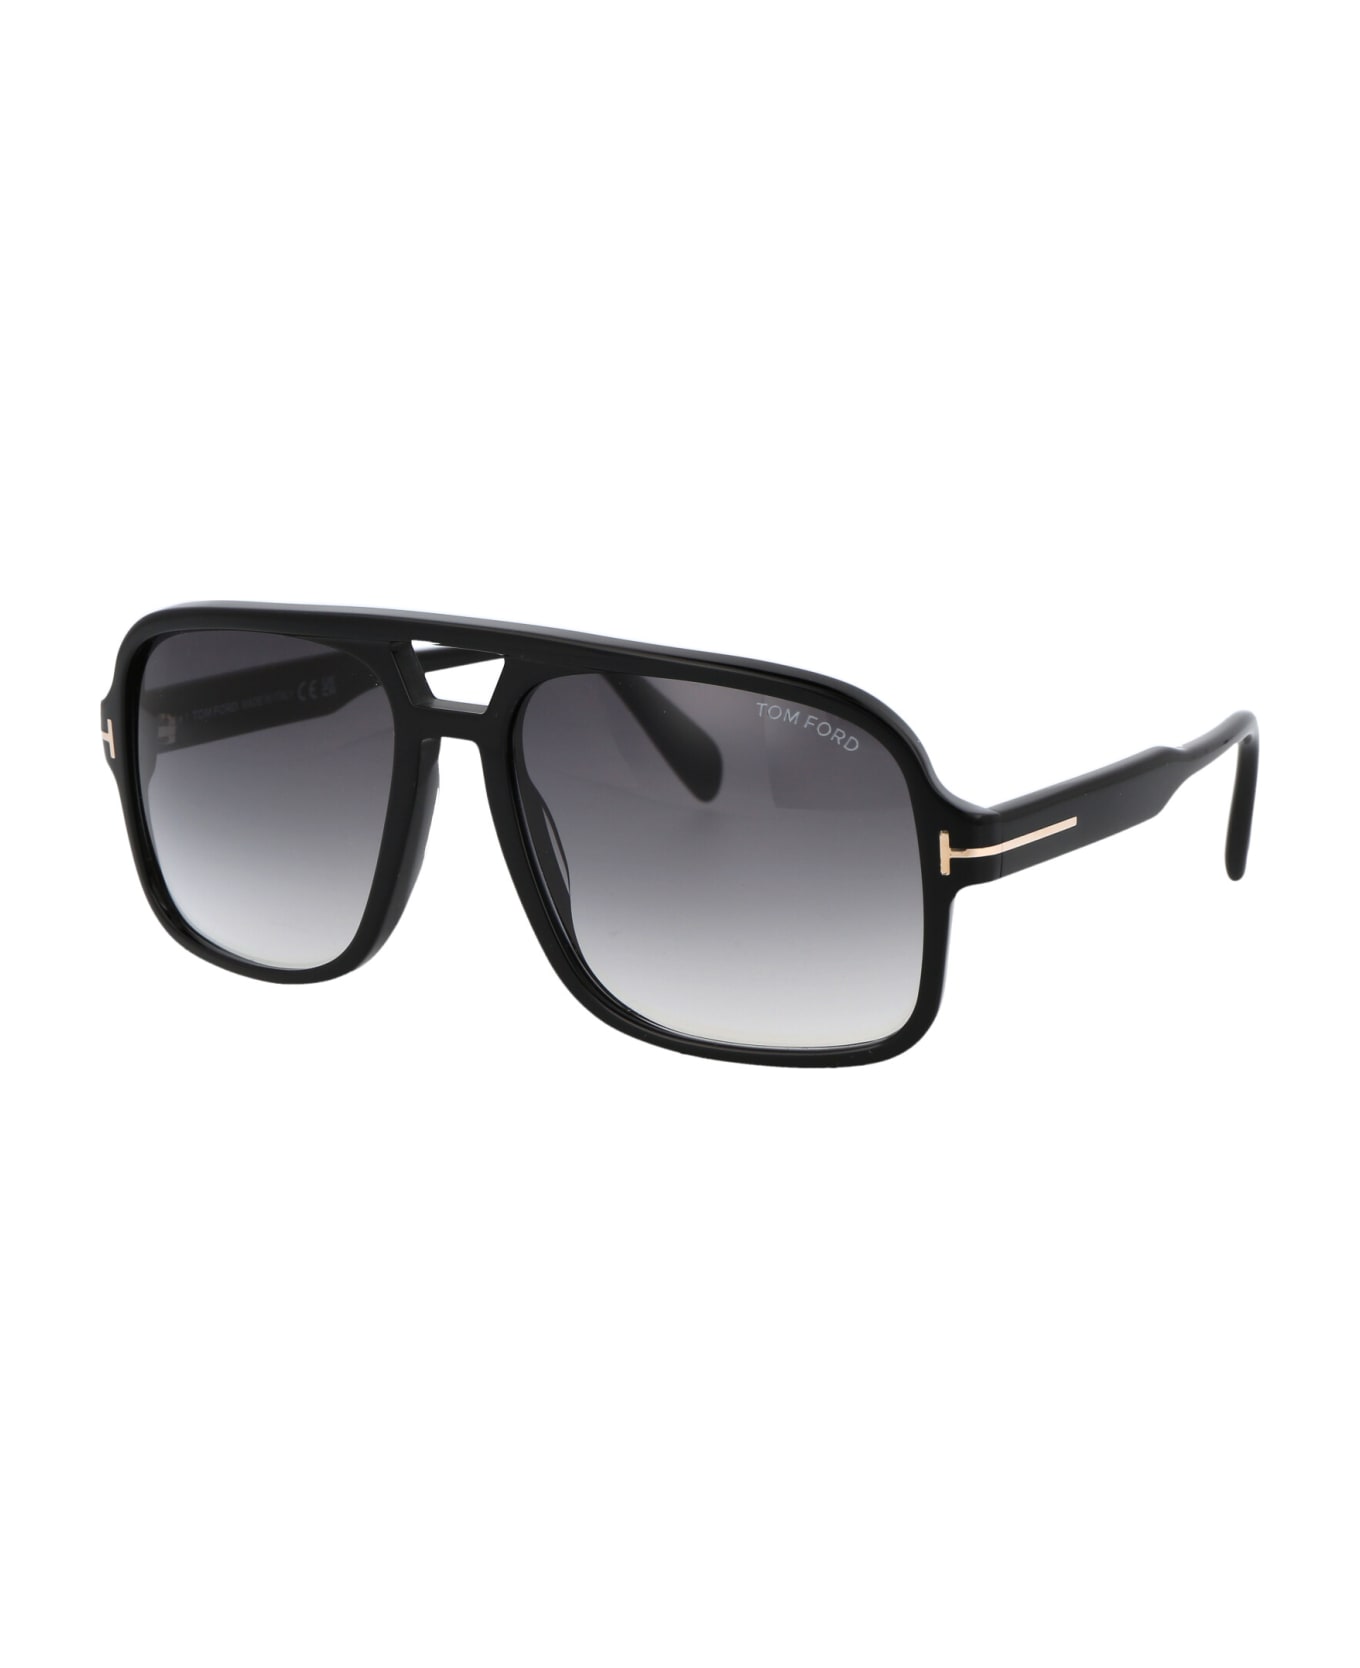 Tom Ford Eyewear Falconer-02 Sunglasses - 01B Nero Lucido / Fumo Grad サングラス